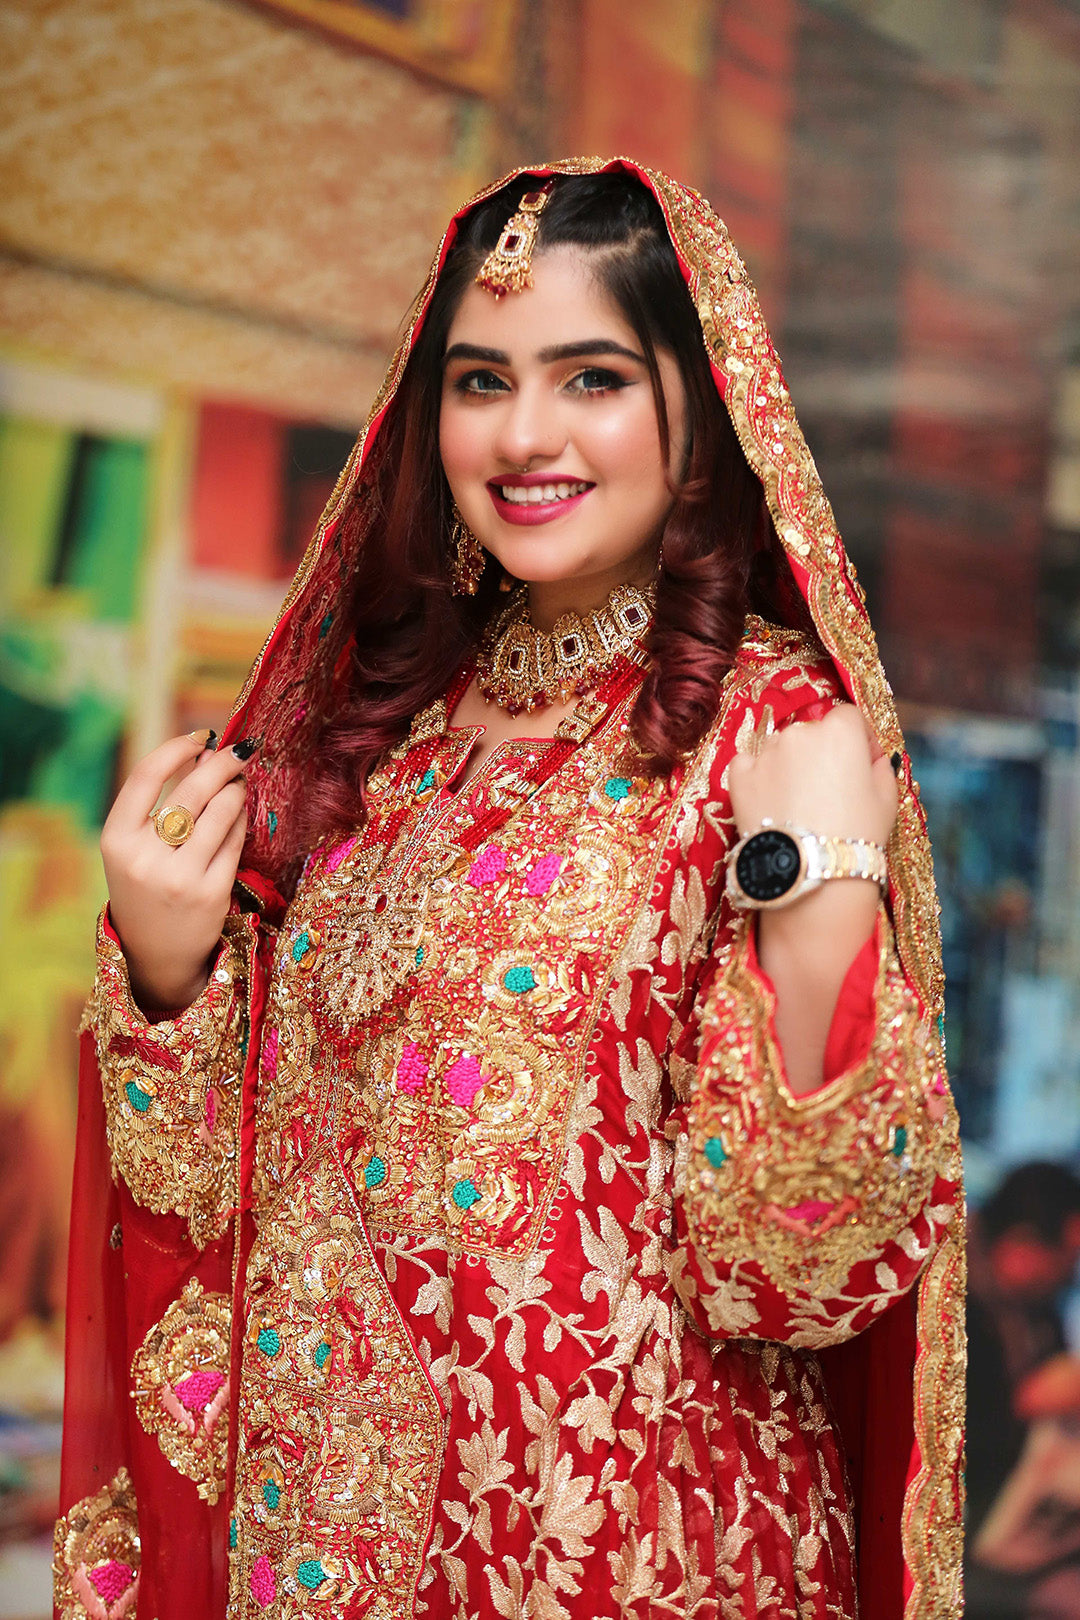 Open Gown Lehenga Dupatta Pakistani Silver Bridal Dress